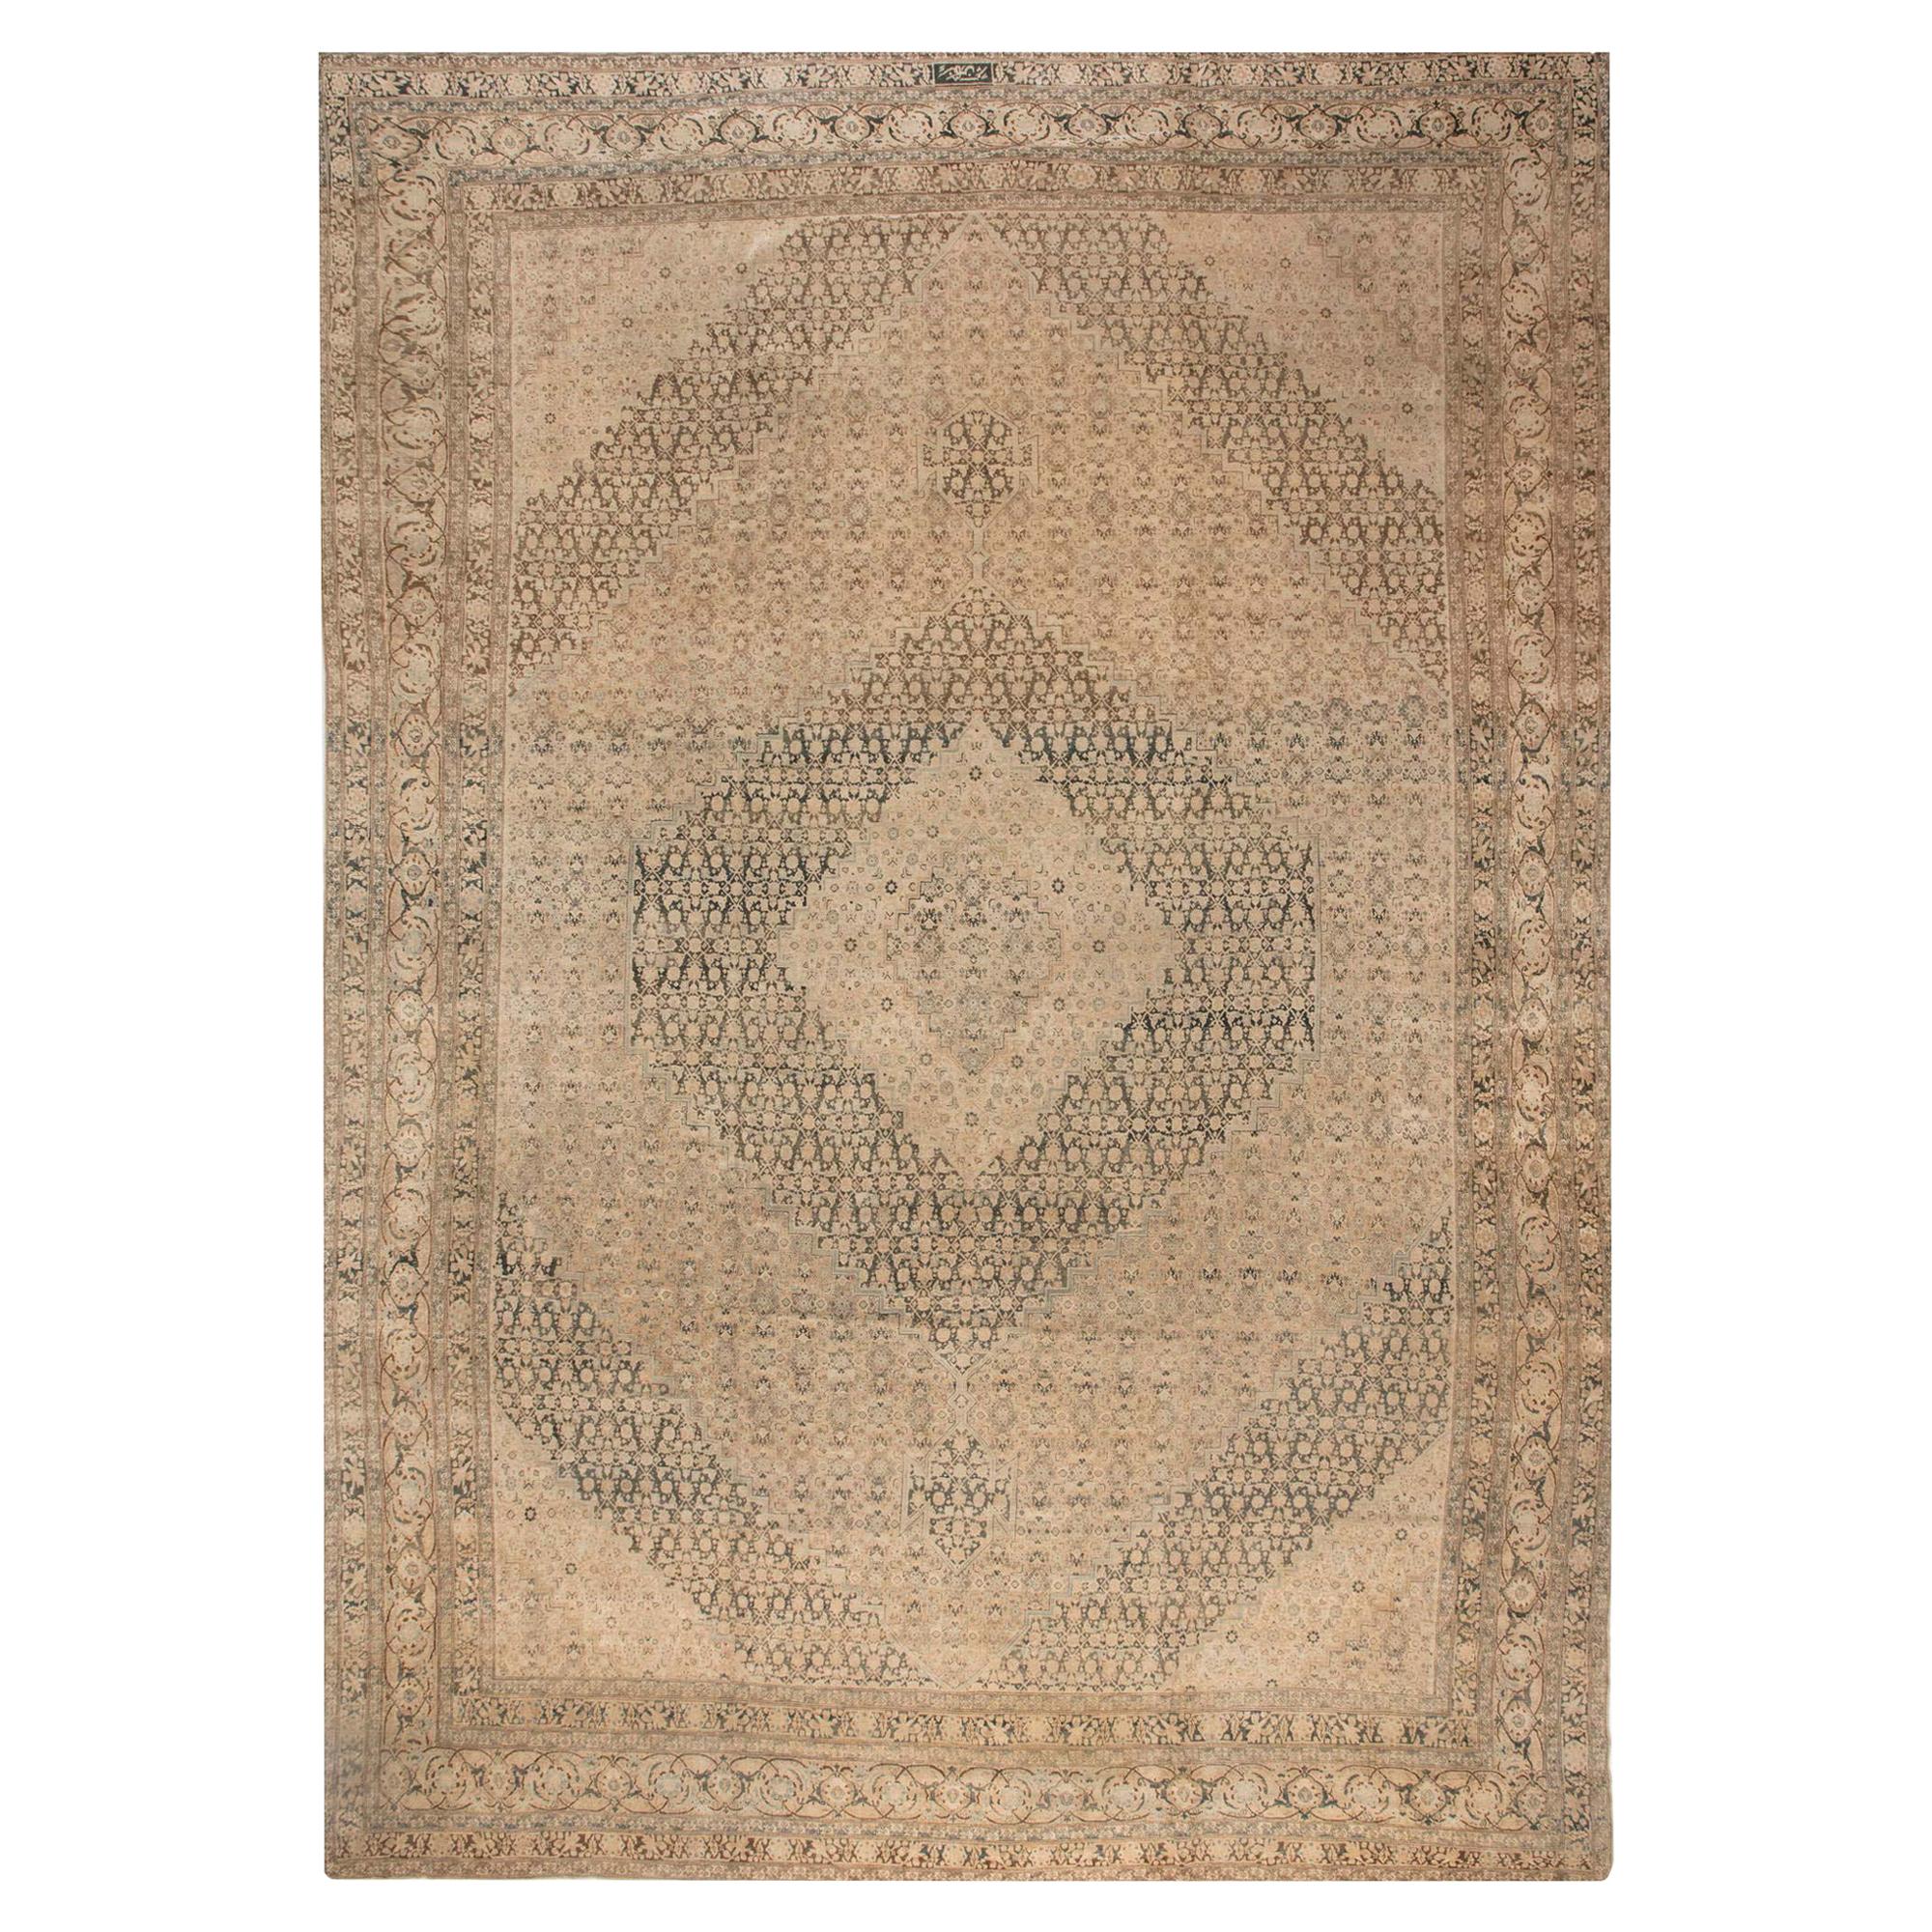 Antique Persian Tabriz Handwoven Wool Carpet